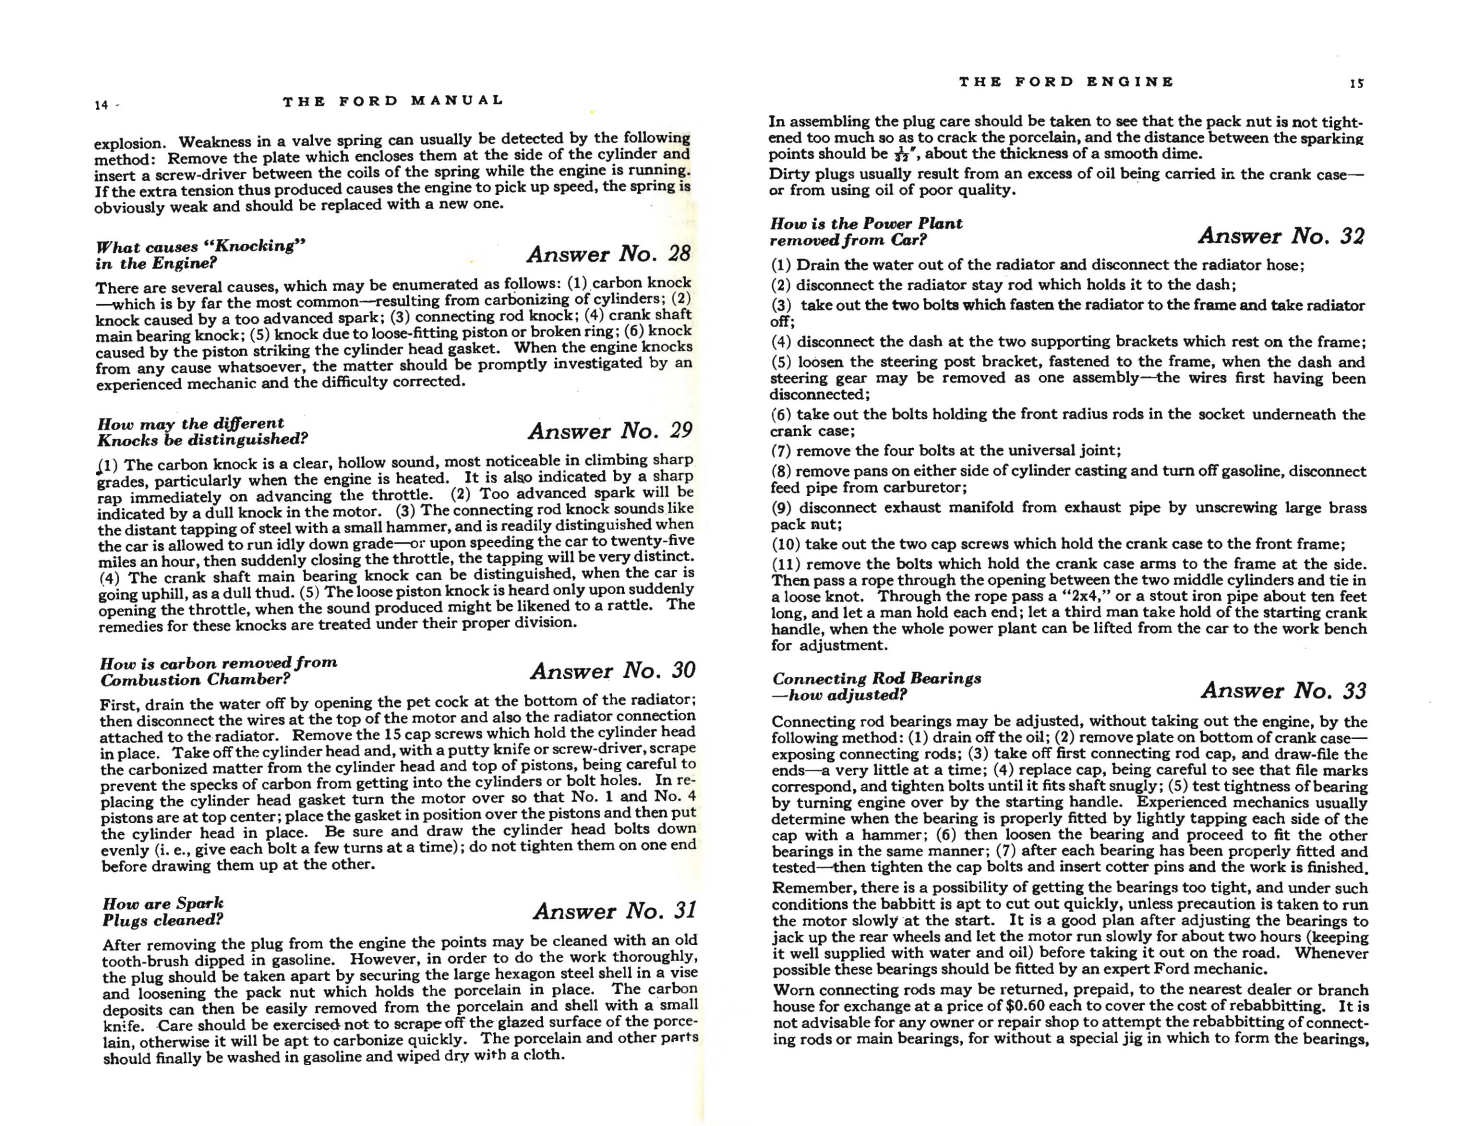 n_1924 Ford Owners Manual-14-15.jpg